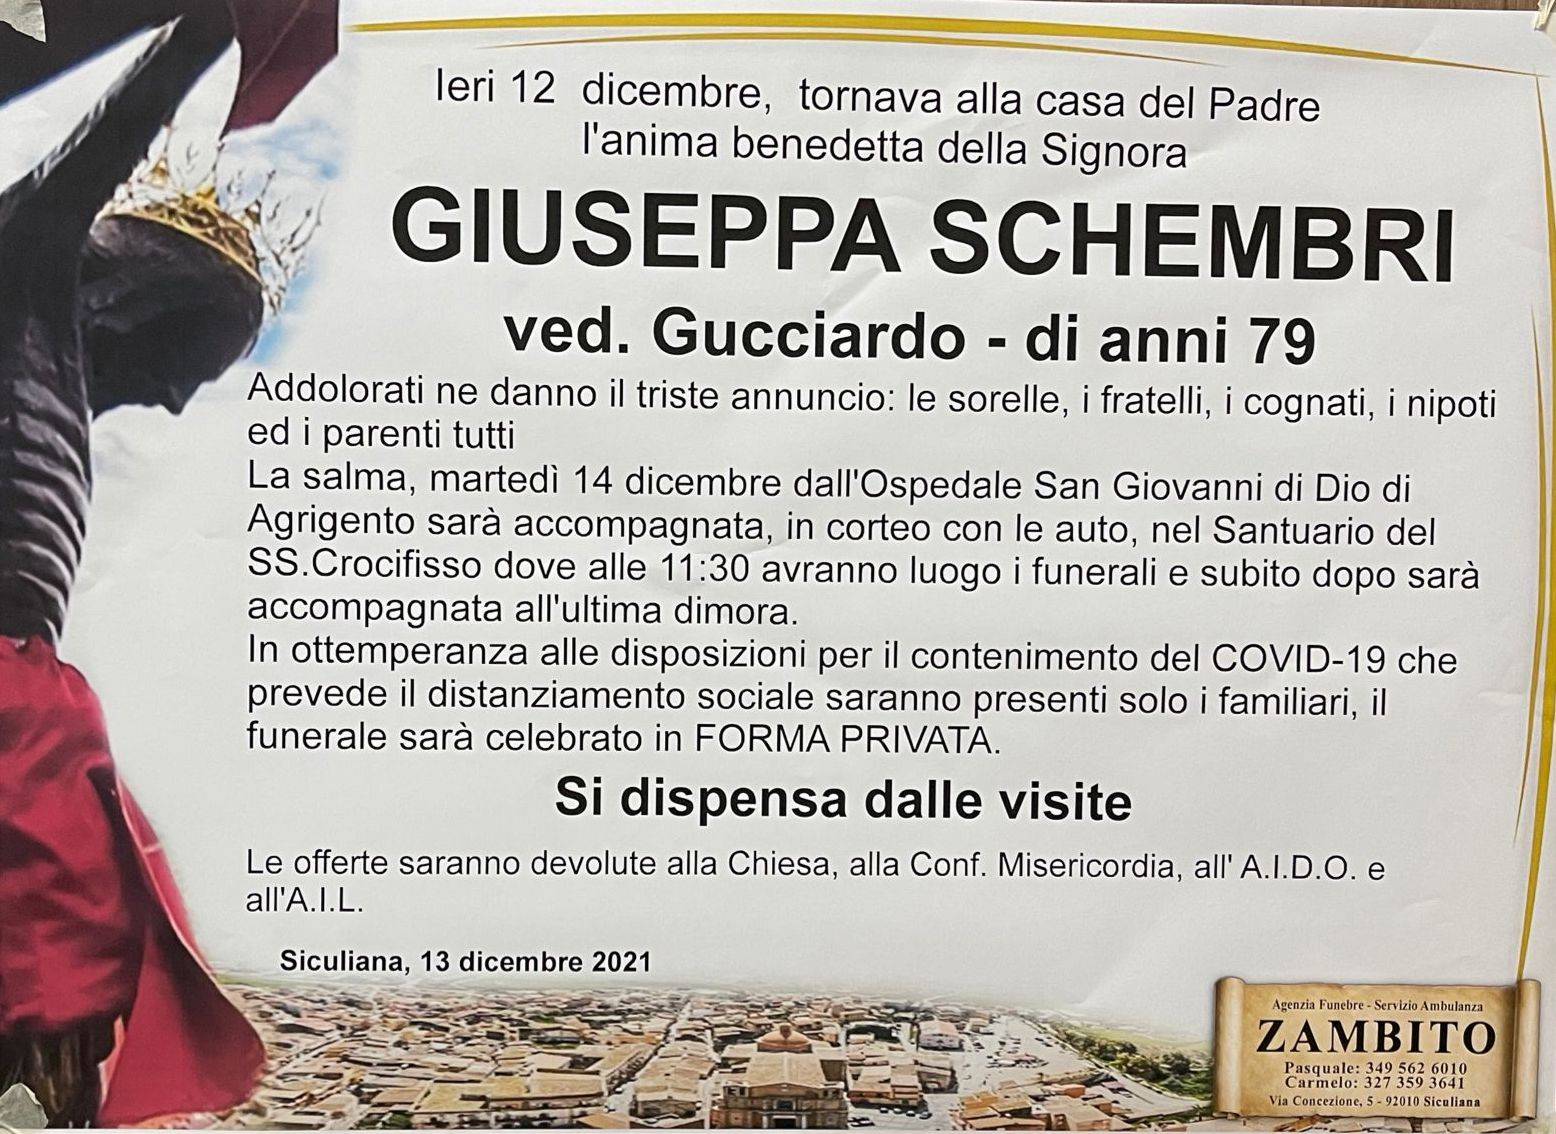 Giuseppa Schembri